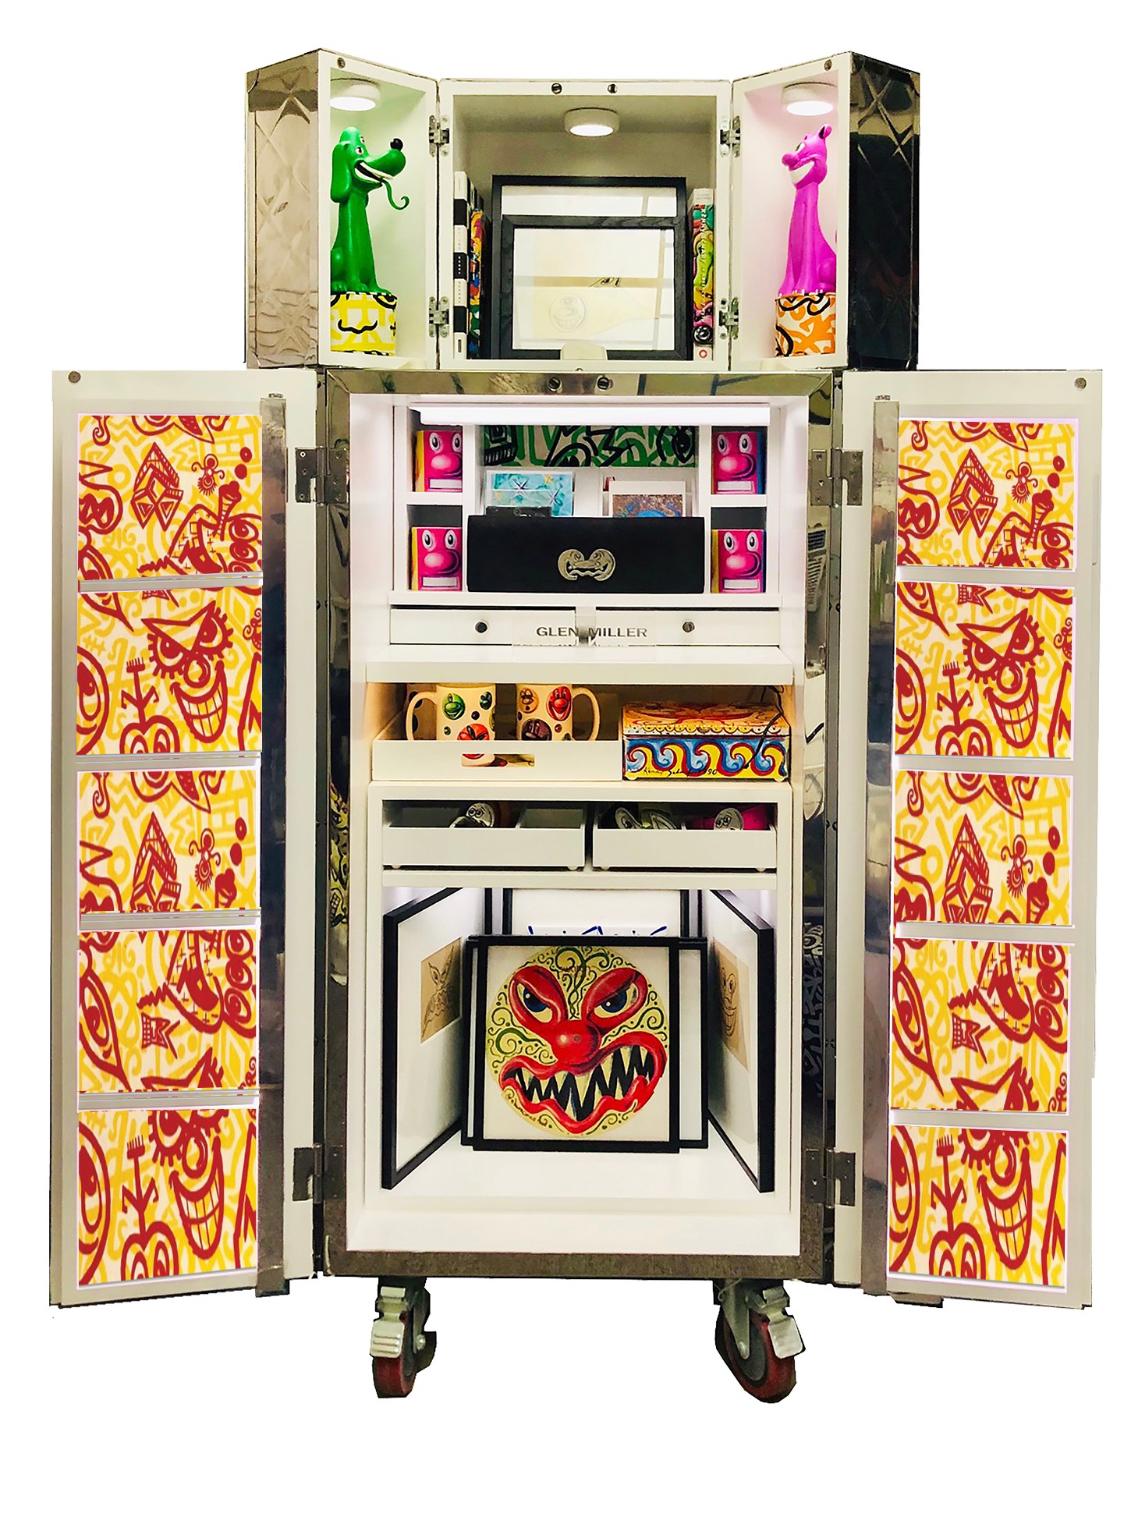 Kosmic Cabinet - Art by Kenny Scharf & Glen Miller